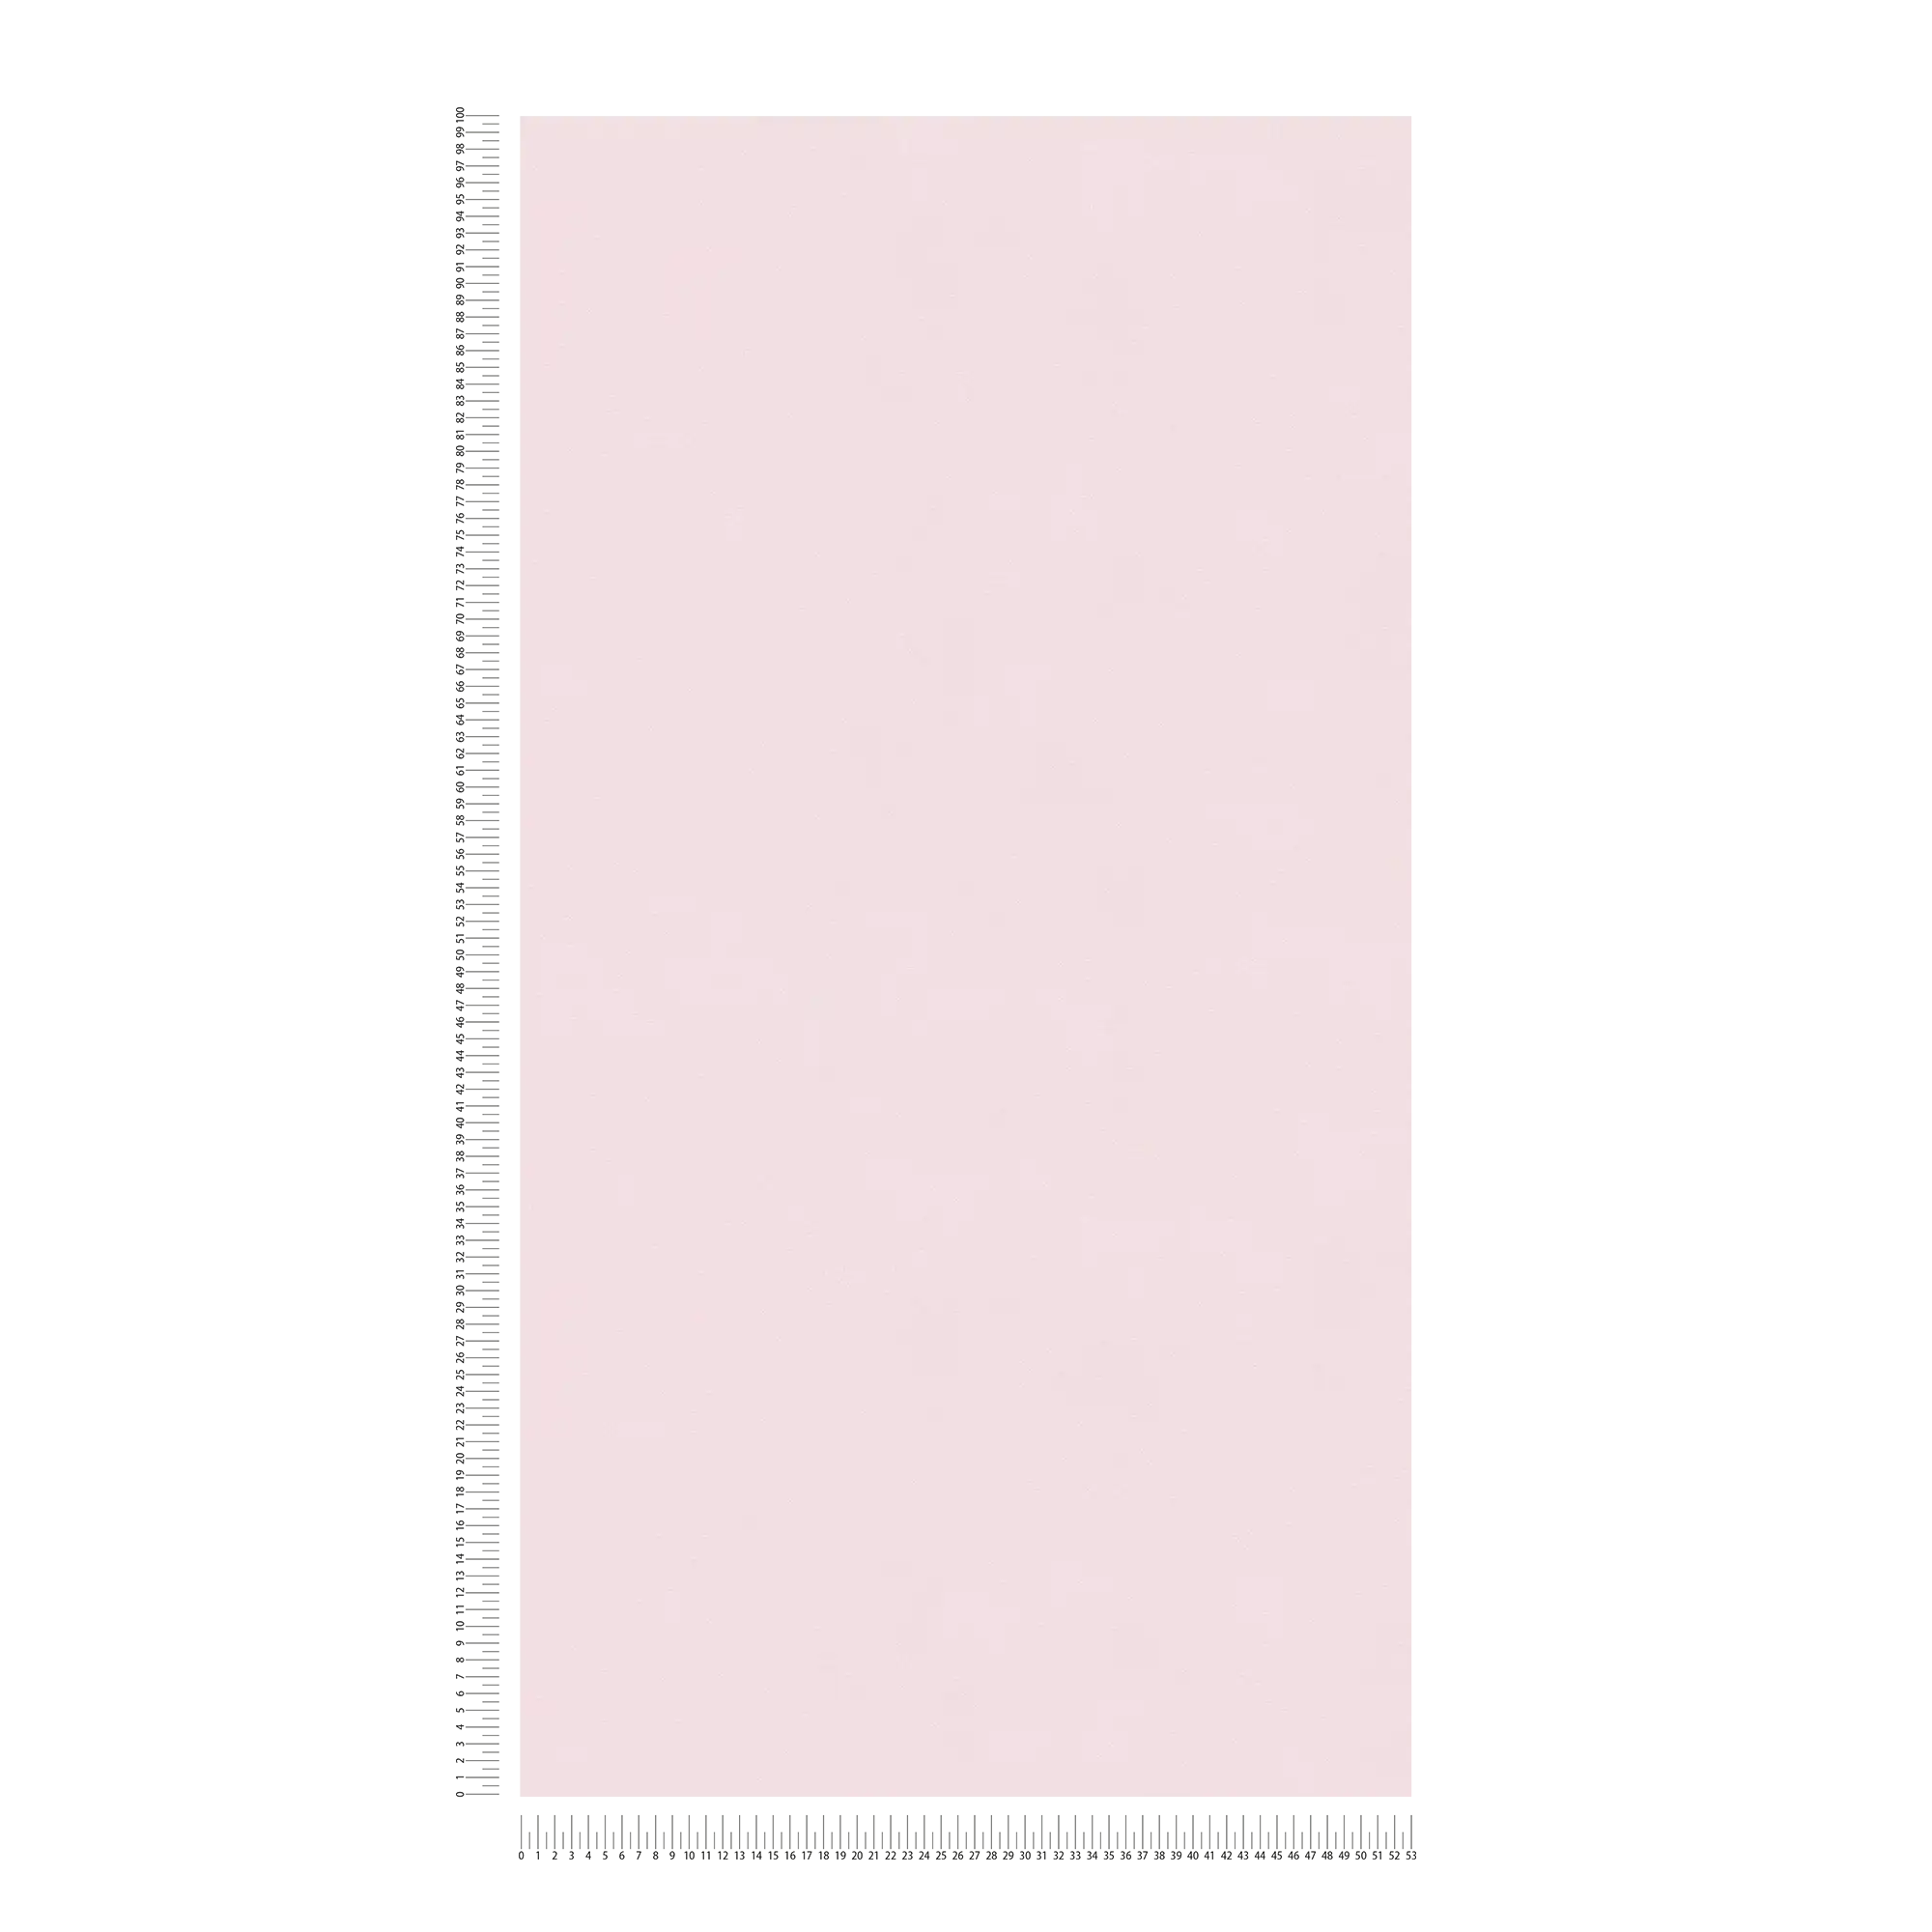             Papel Pintado Rosa Pálido Color Blush Mate - Rosa
        